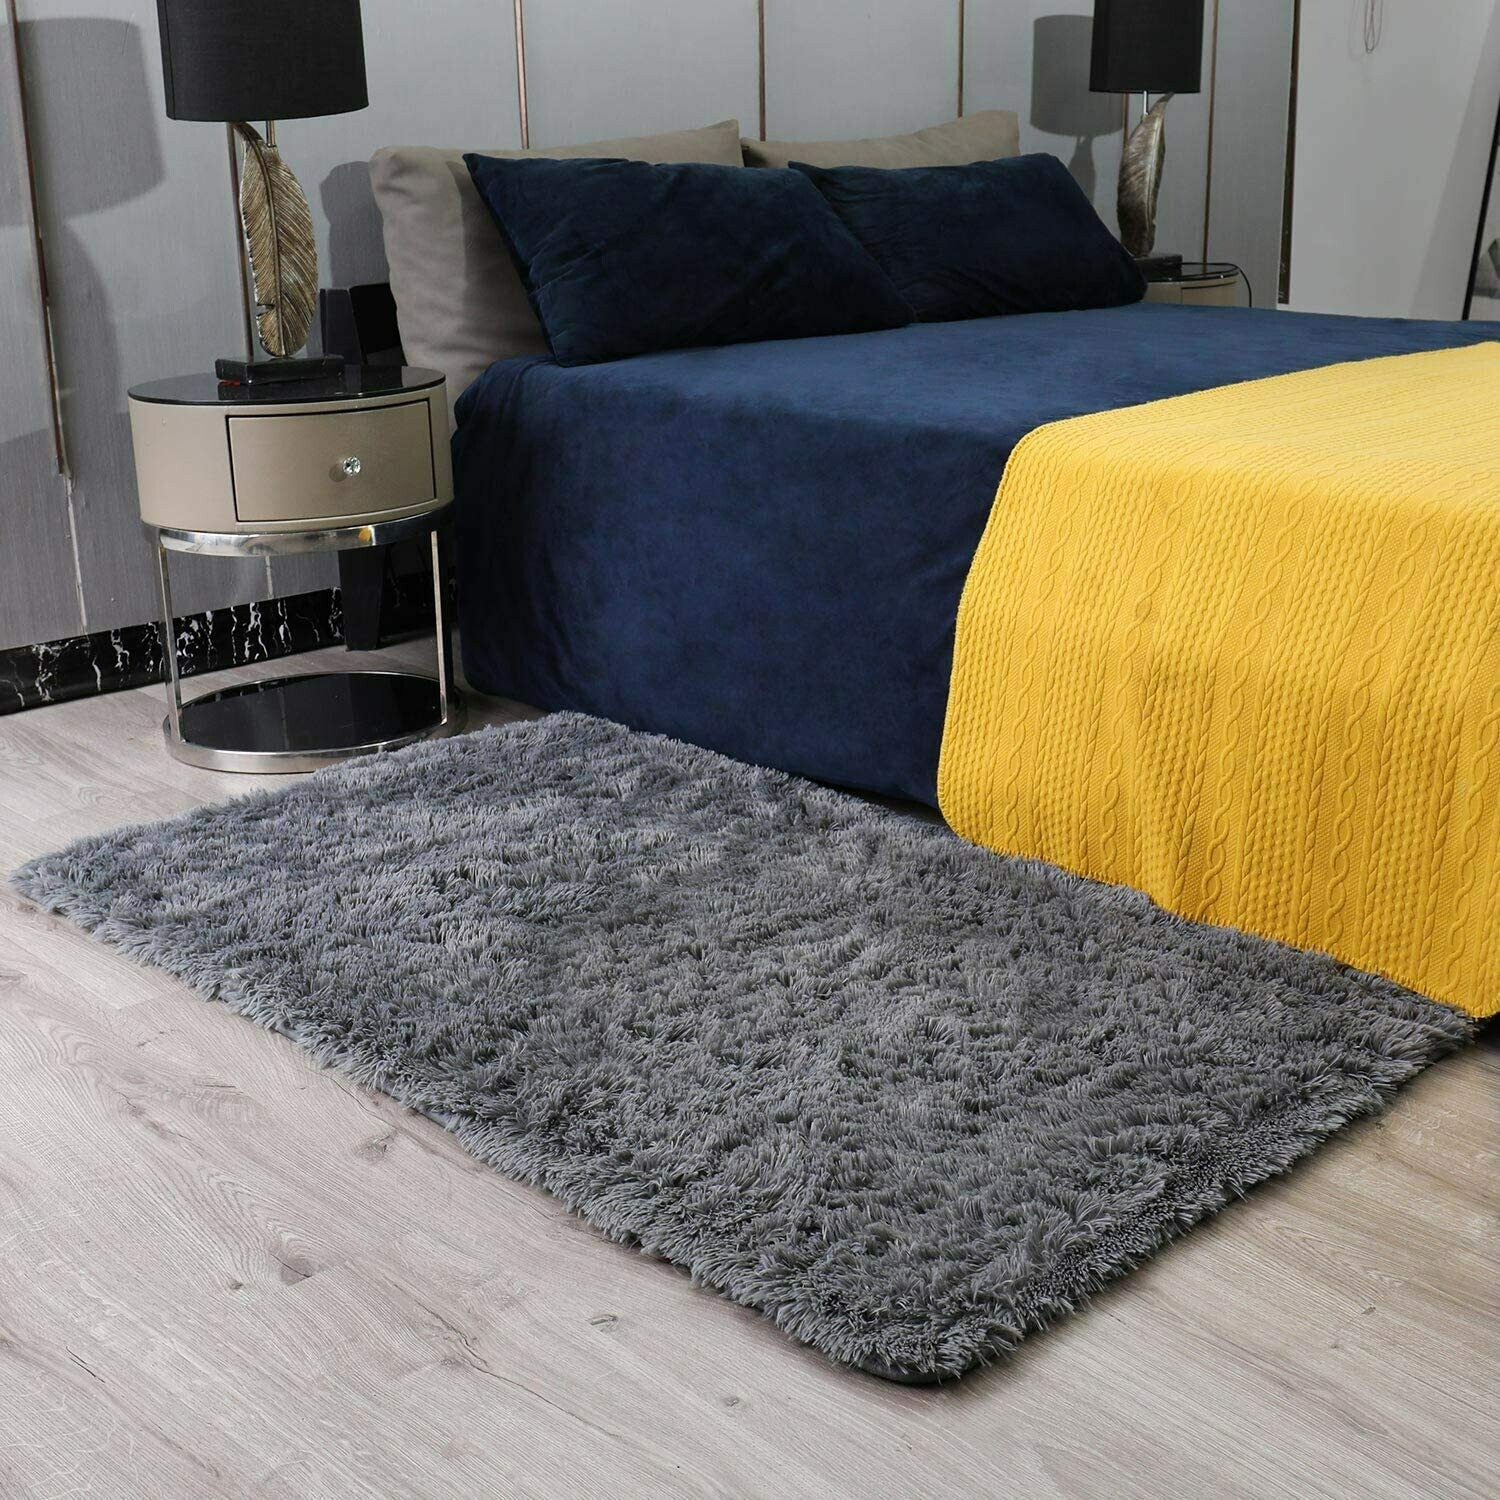 Ultra Soft Fluffy Area Rugs for Bedroom, Luxury Shag Rug Faux Fur Non-Slip Floor Carpet for Living Room, Kids Room, Baby Room, Girls Room, and Nursery - Modern Home Decor, 3x5 Feet Grey